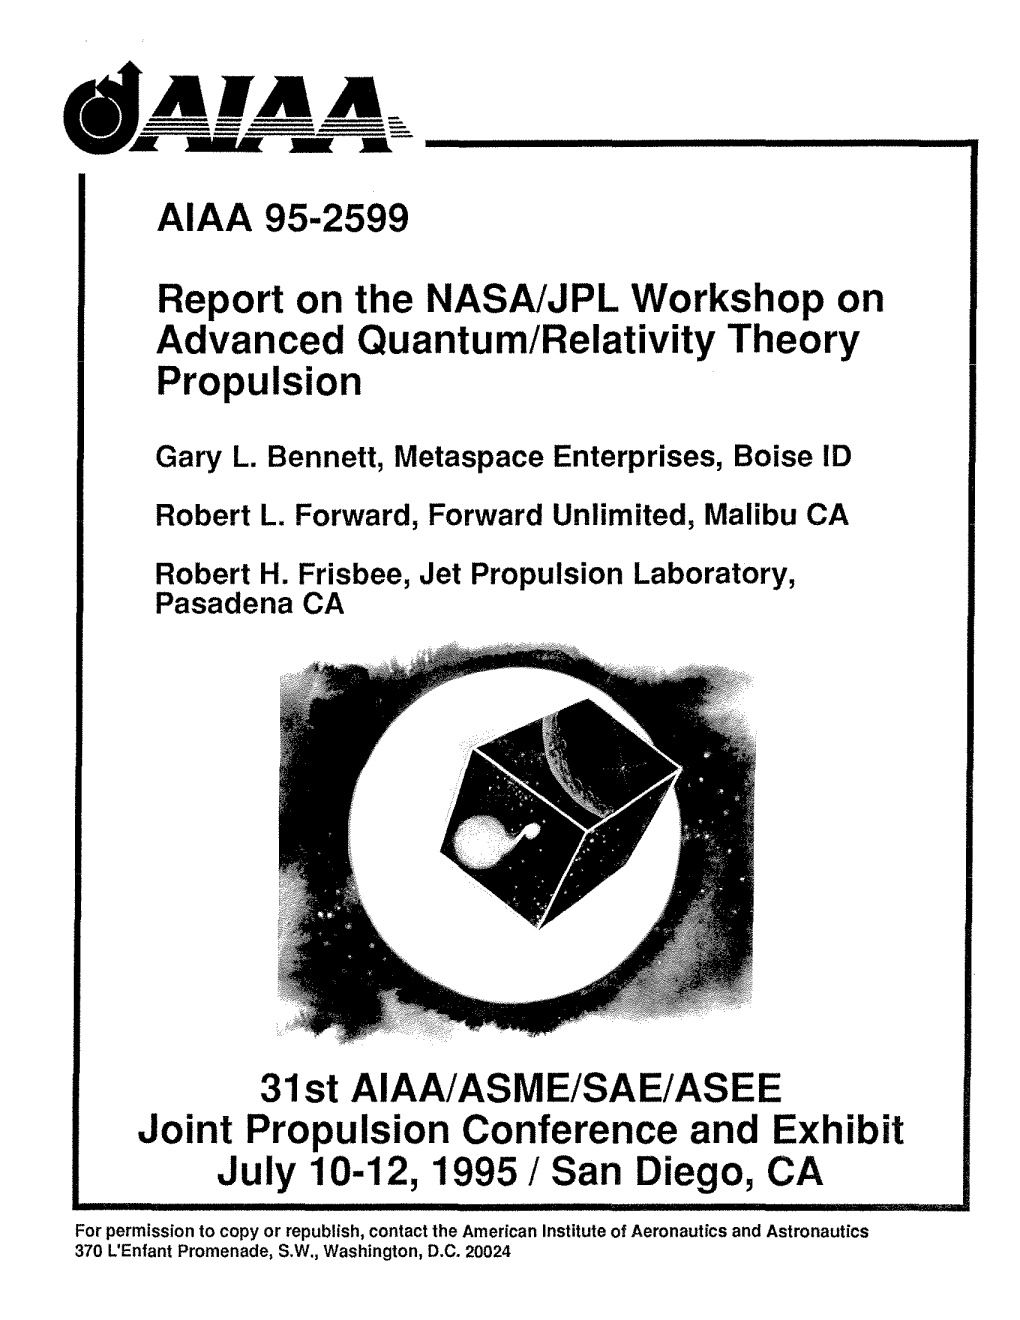 Report on the NASAIJPL Workshop on Advanced Quantum/Relativity Theory Propulsion